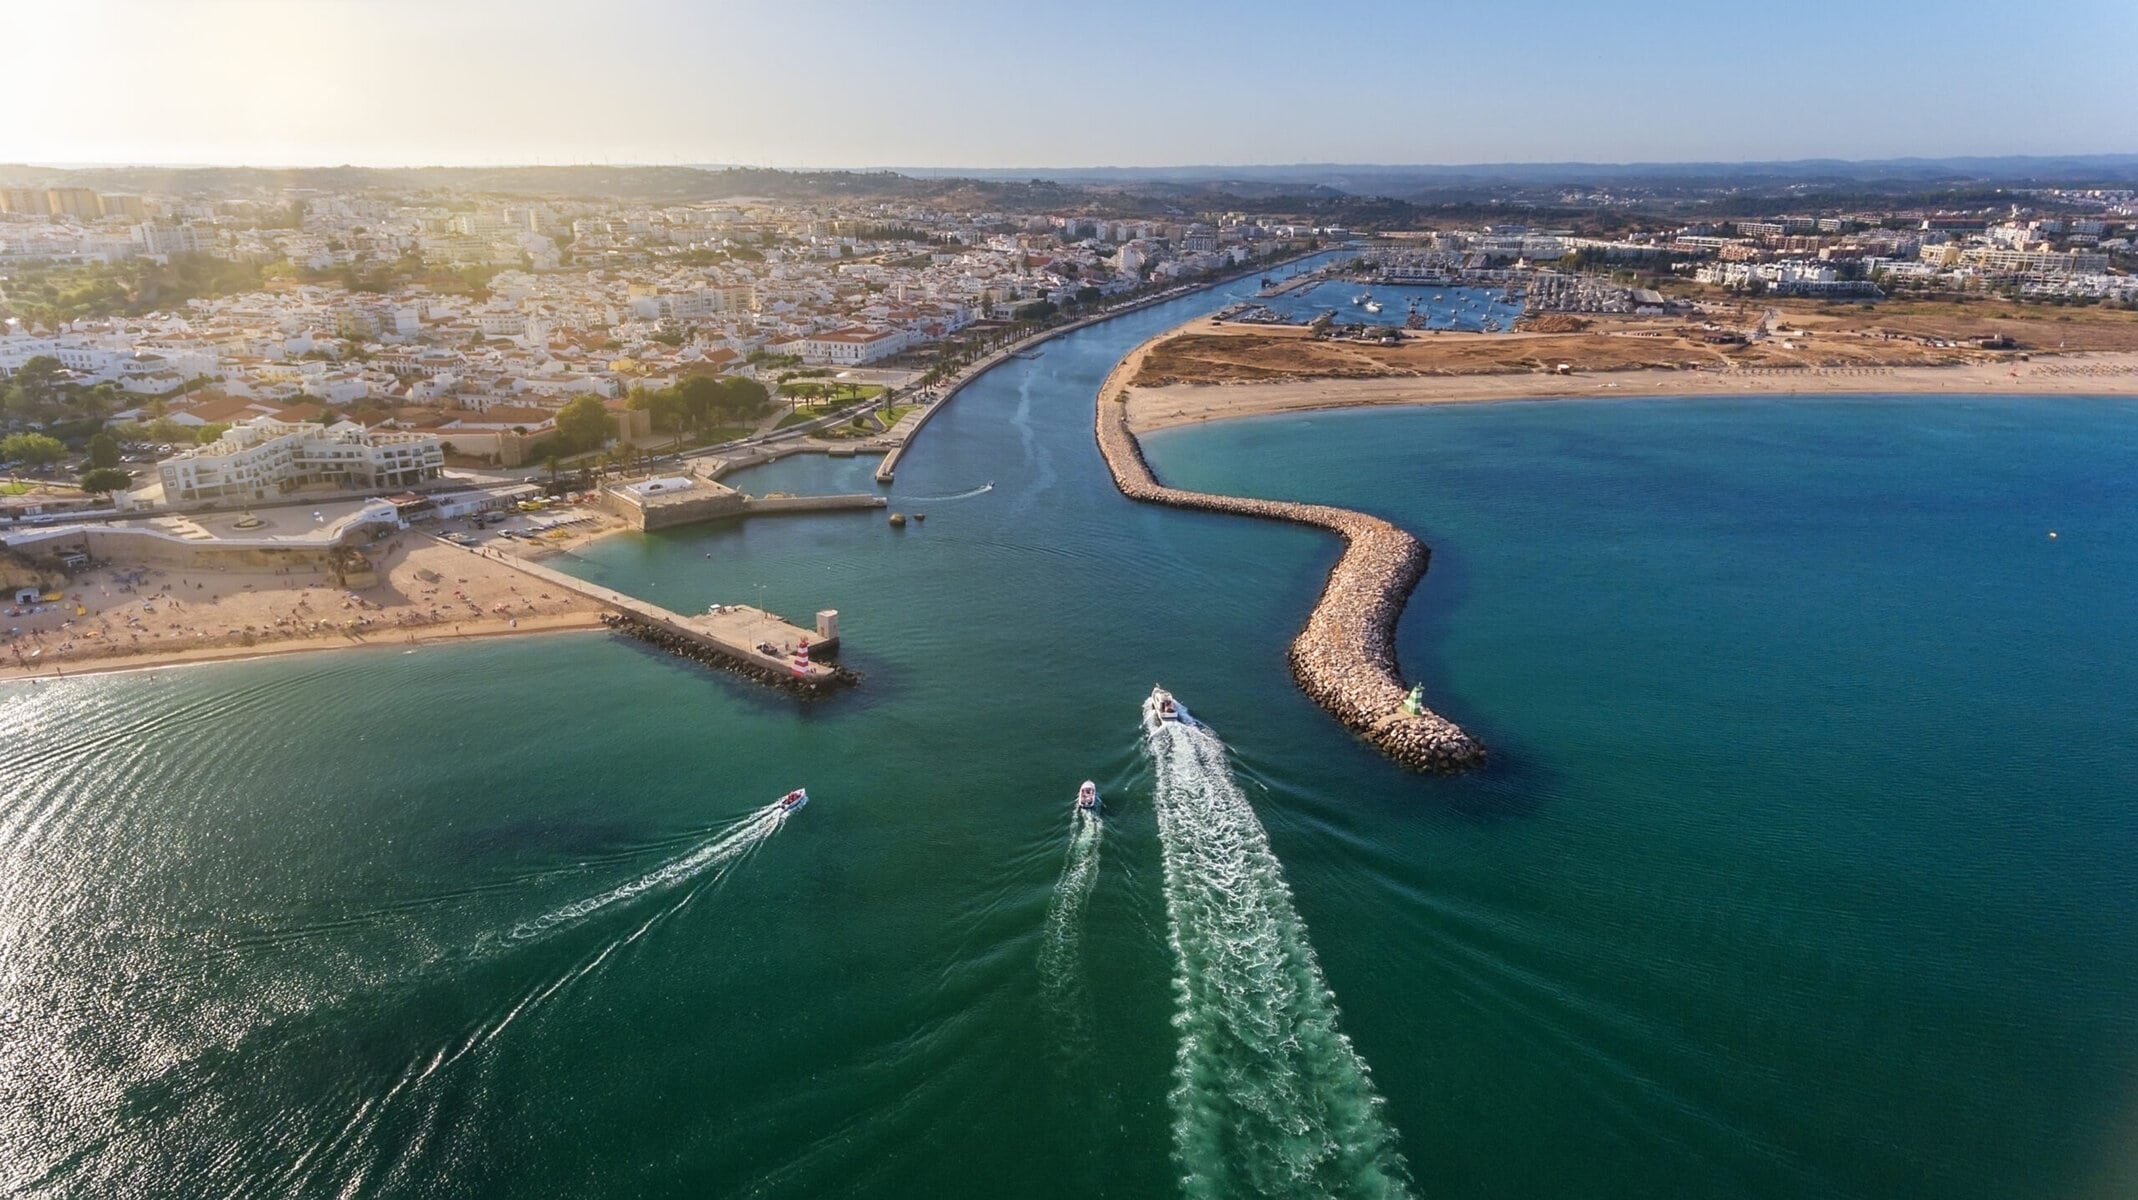 Lagos Algarve: Exploring the Algarve's Vibrant Corner with a Twist